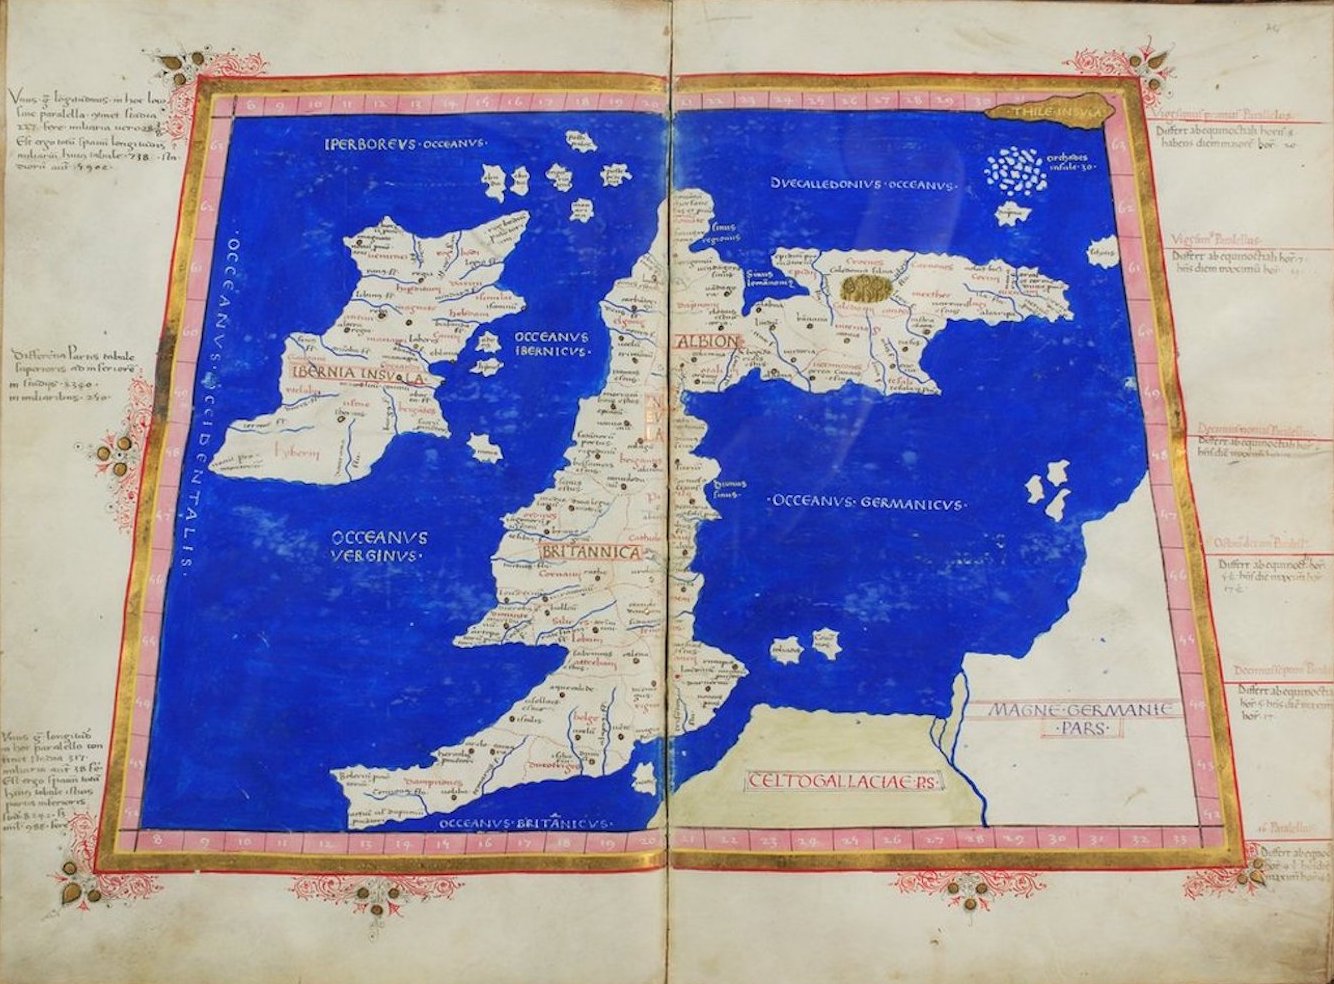 Cosmographia - Ptolemy's Map of Europe - I (1460)